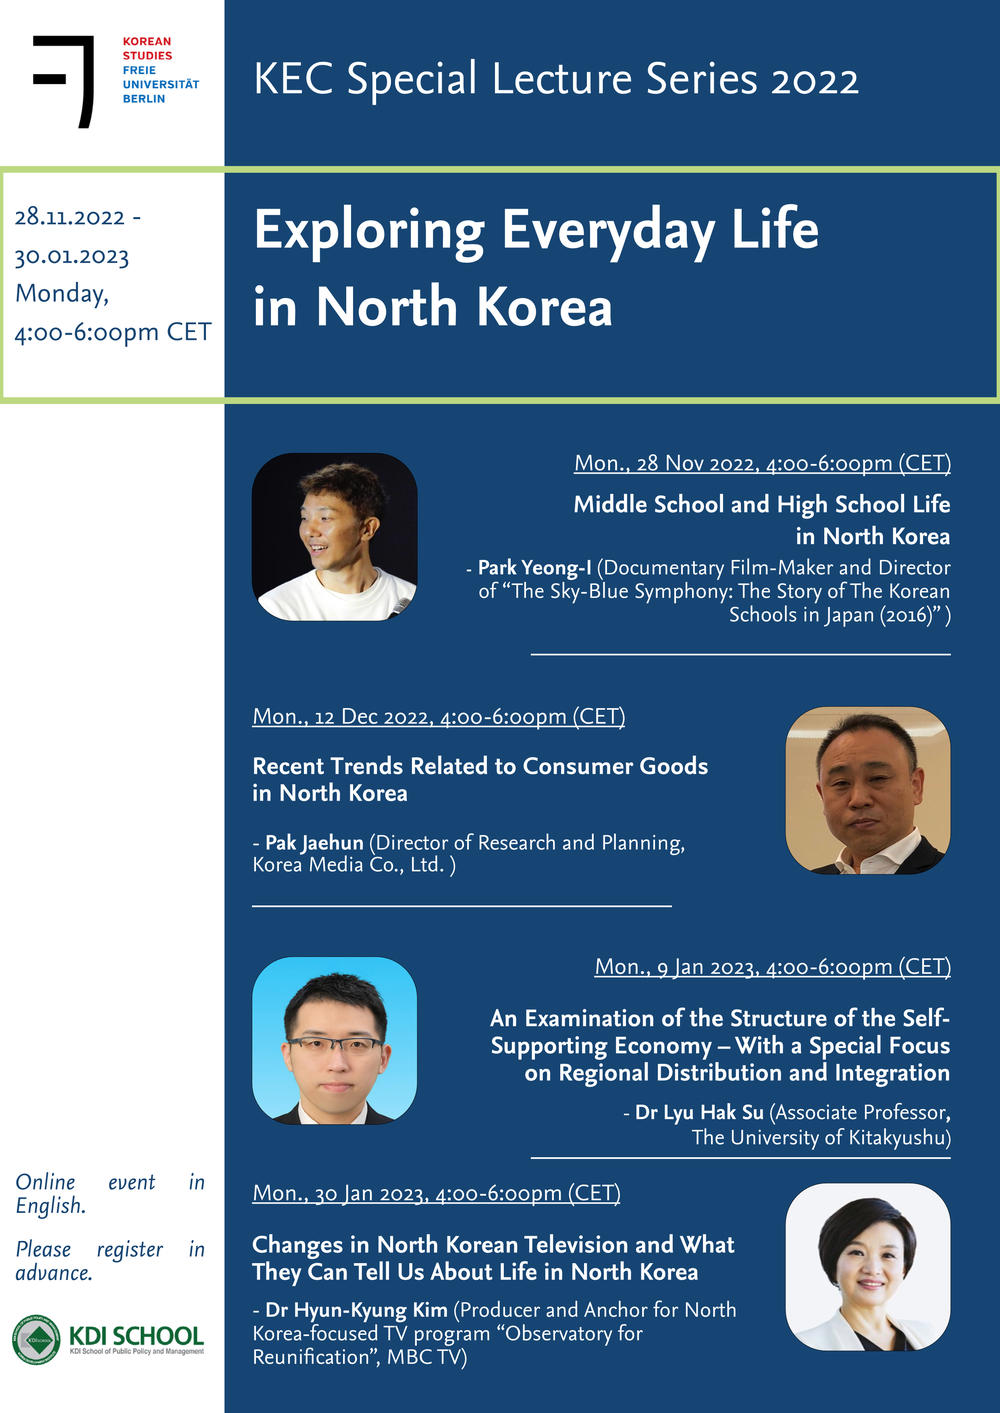 KEC Special Lecture Series on North Korea - Exploring Everyday Life in North Korea